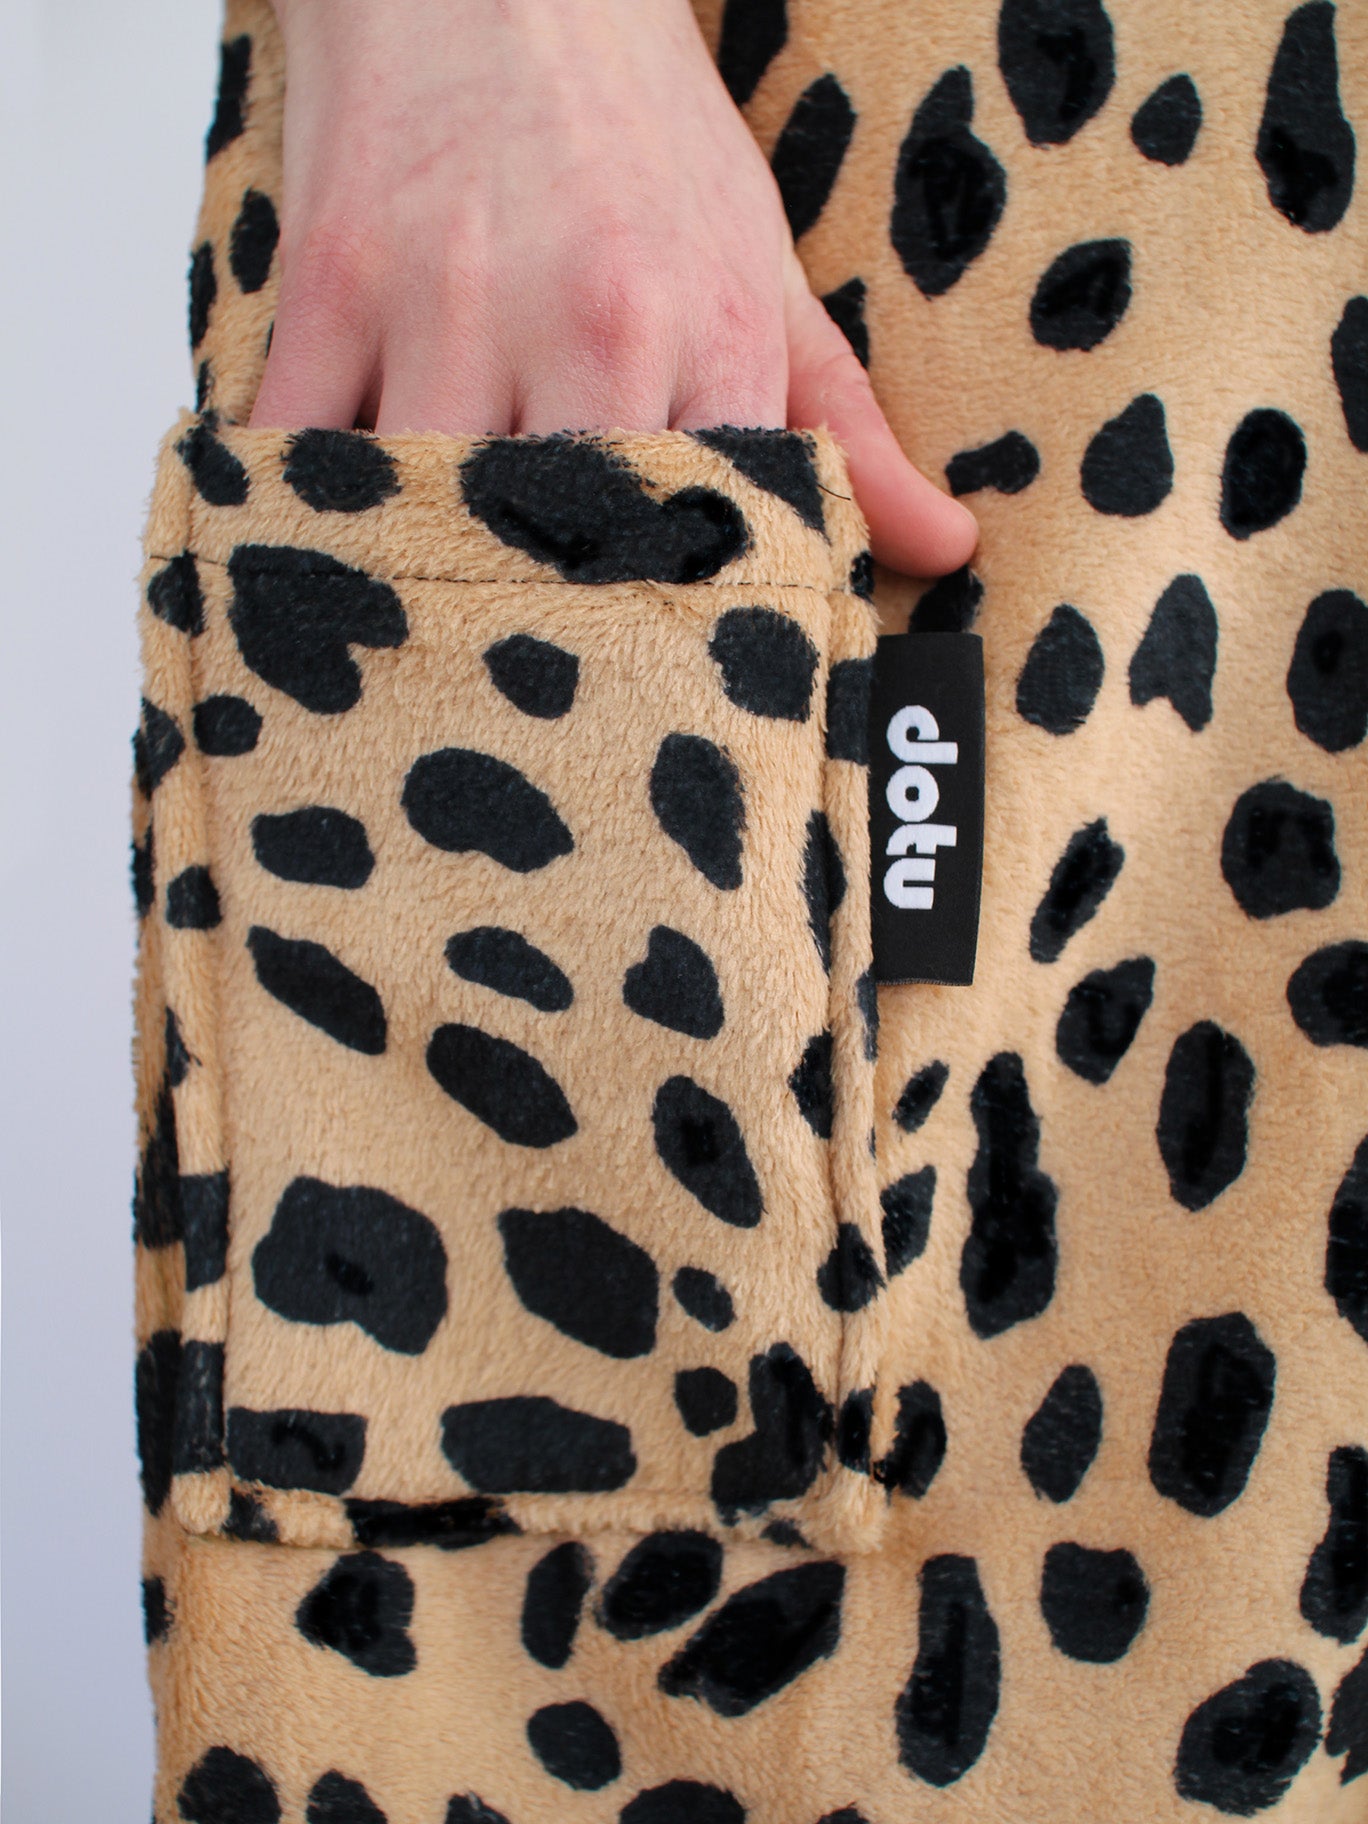 🐆 Veronica ~ Cheetah Bath Towel Set - Dotu